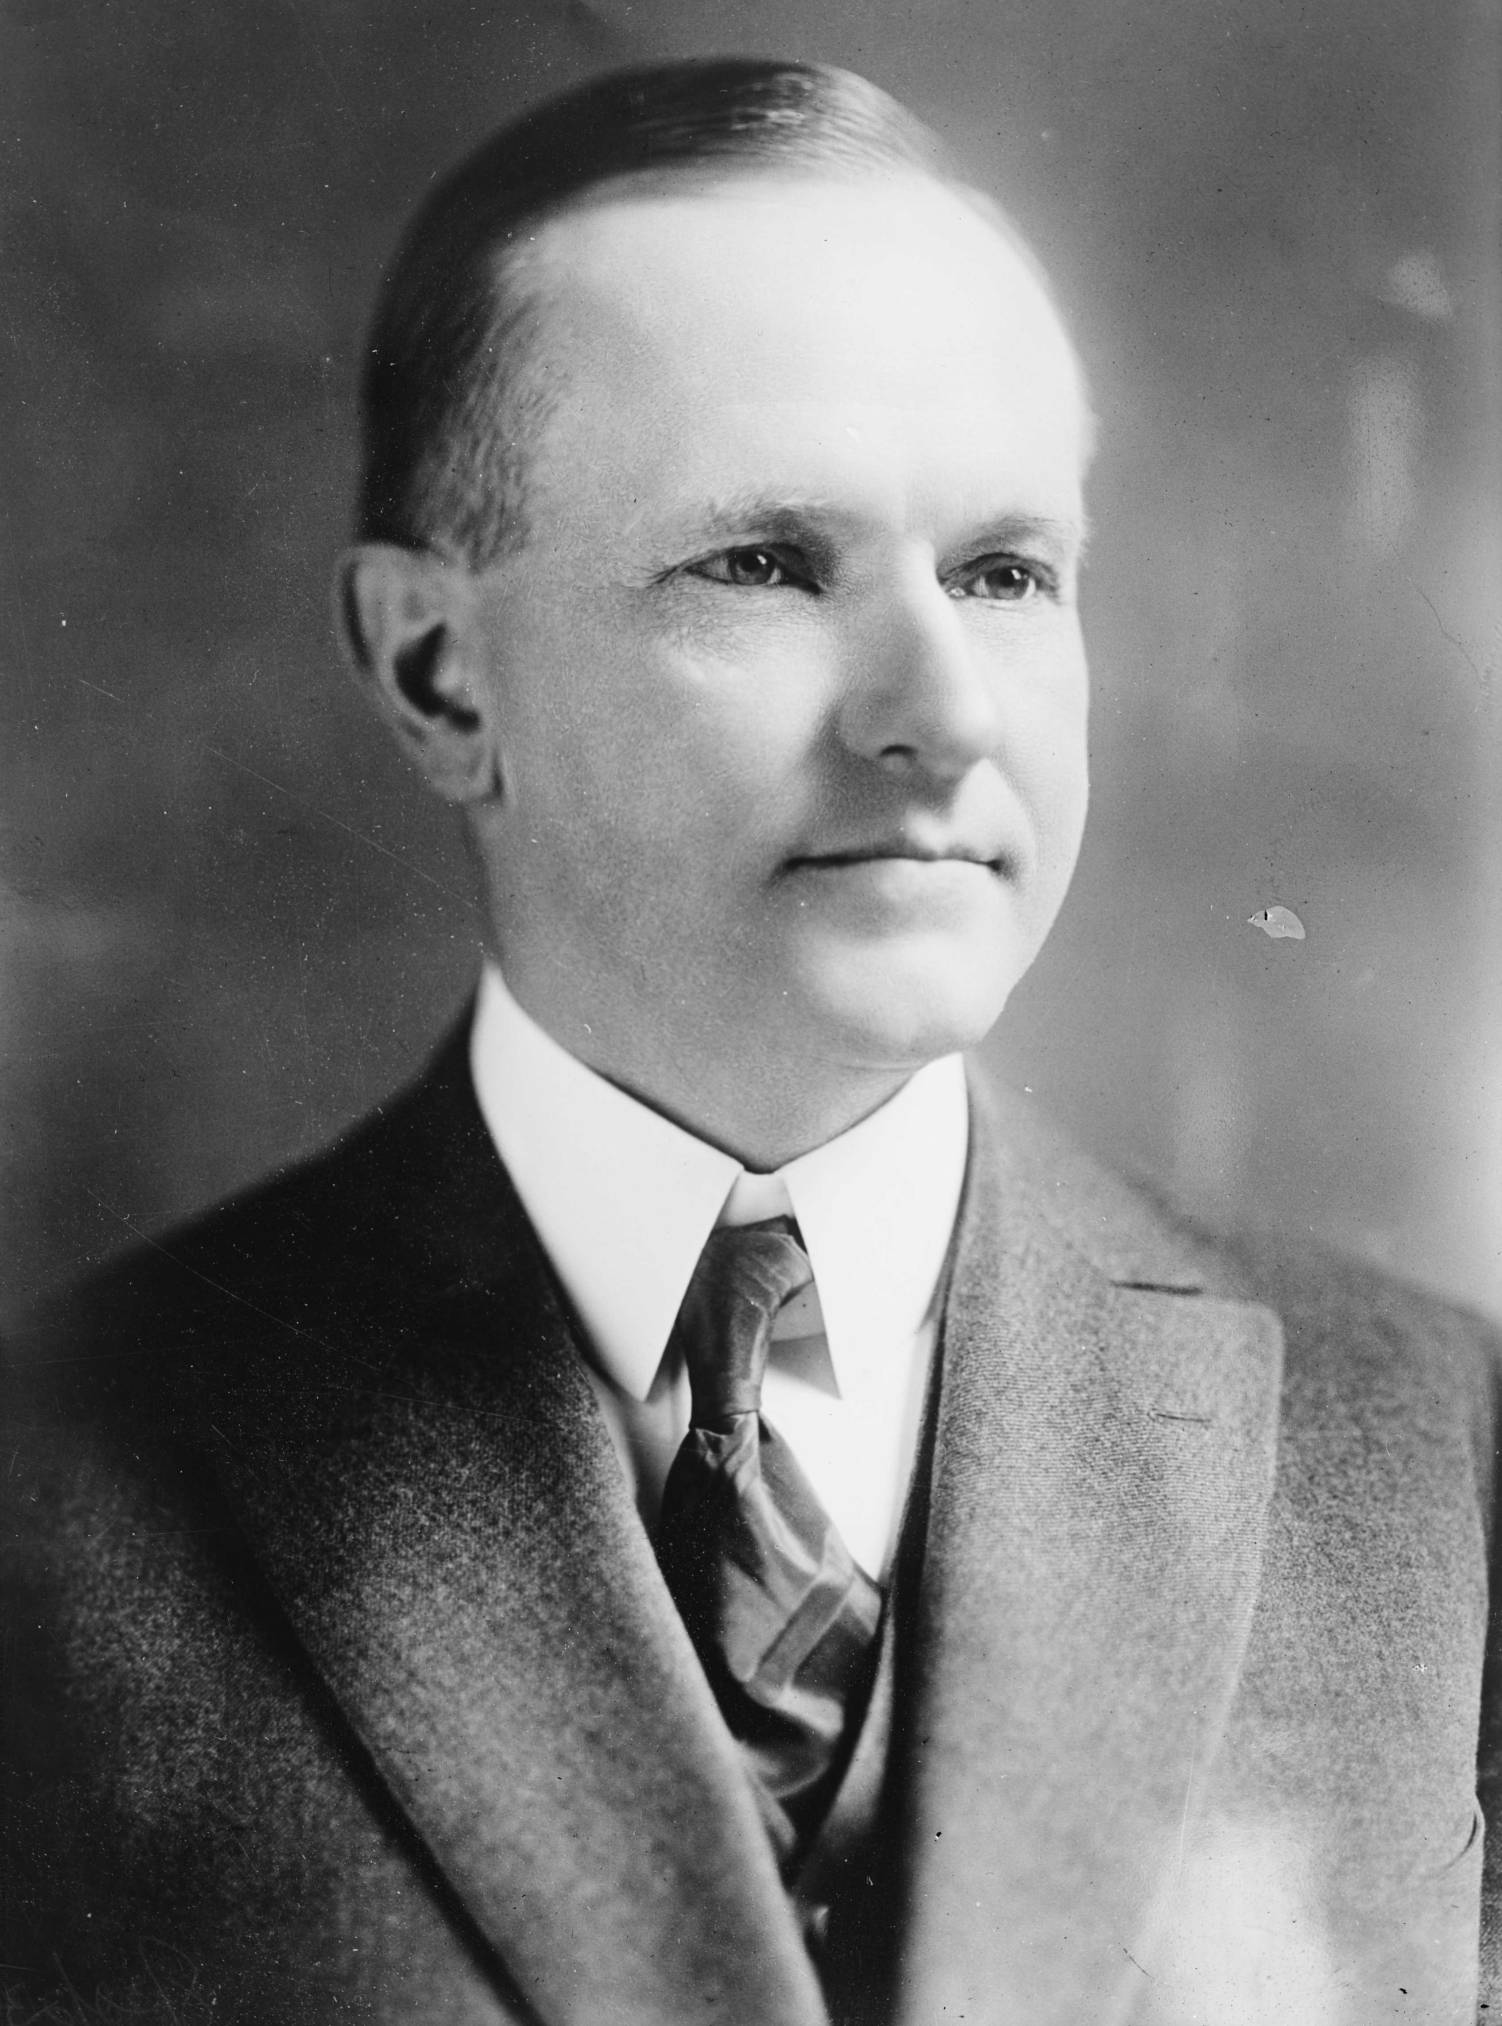 John_Calvin_Coolidge,_Bain_bw_photo_portrait